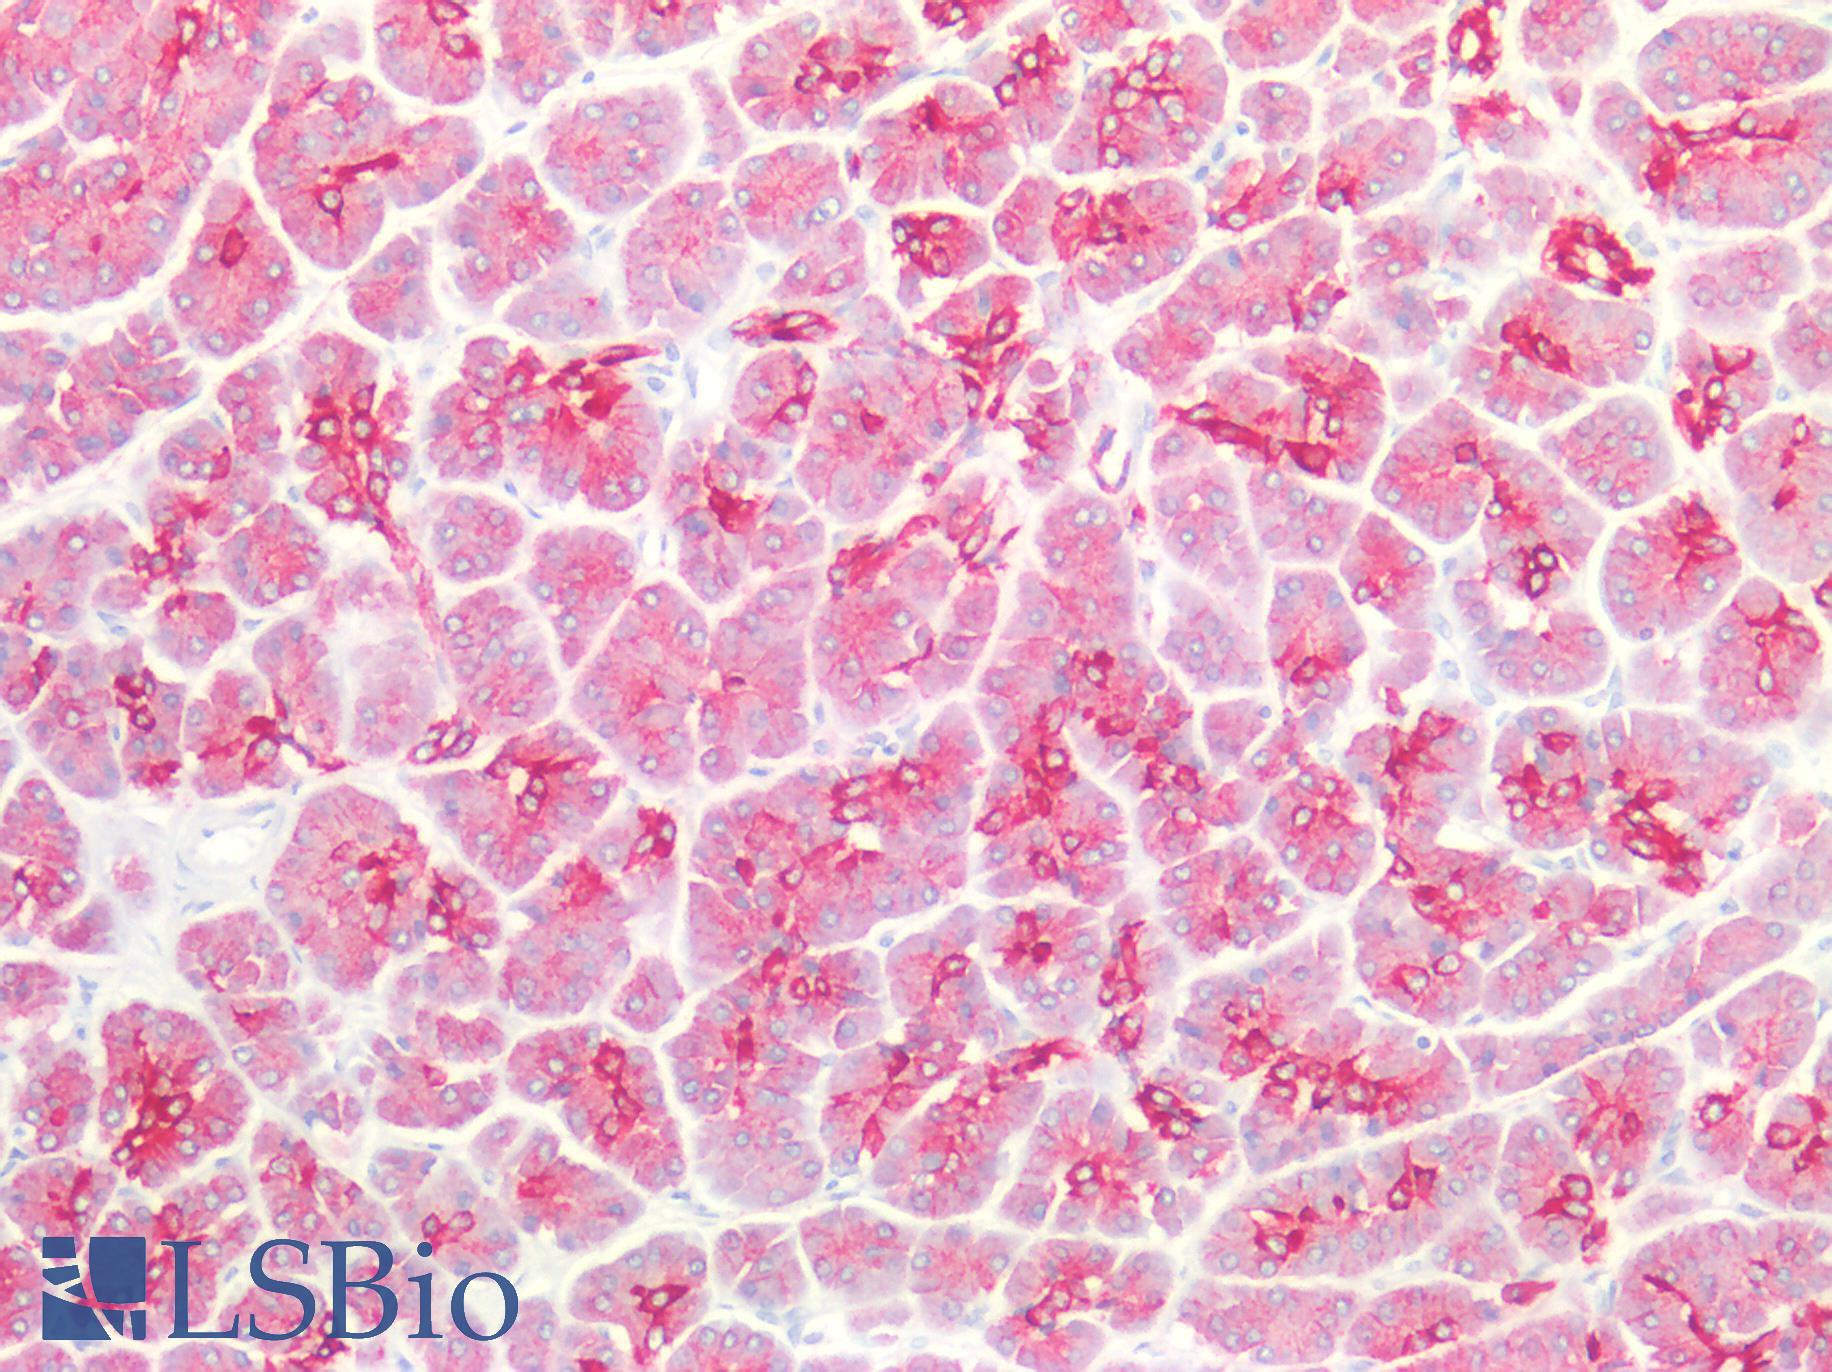 Cytokeratin 8+18 Antibody - Human Pancreas: Formalin-Fixed, Paraffin-Embedded (FFPE)